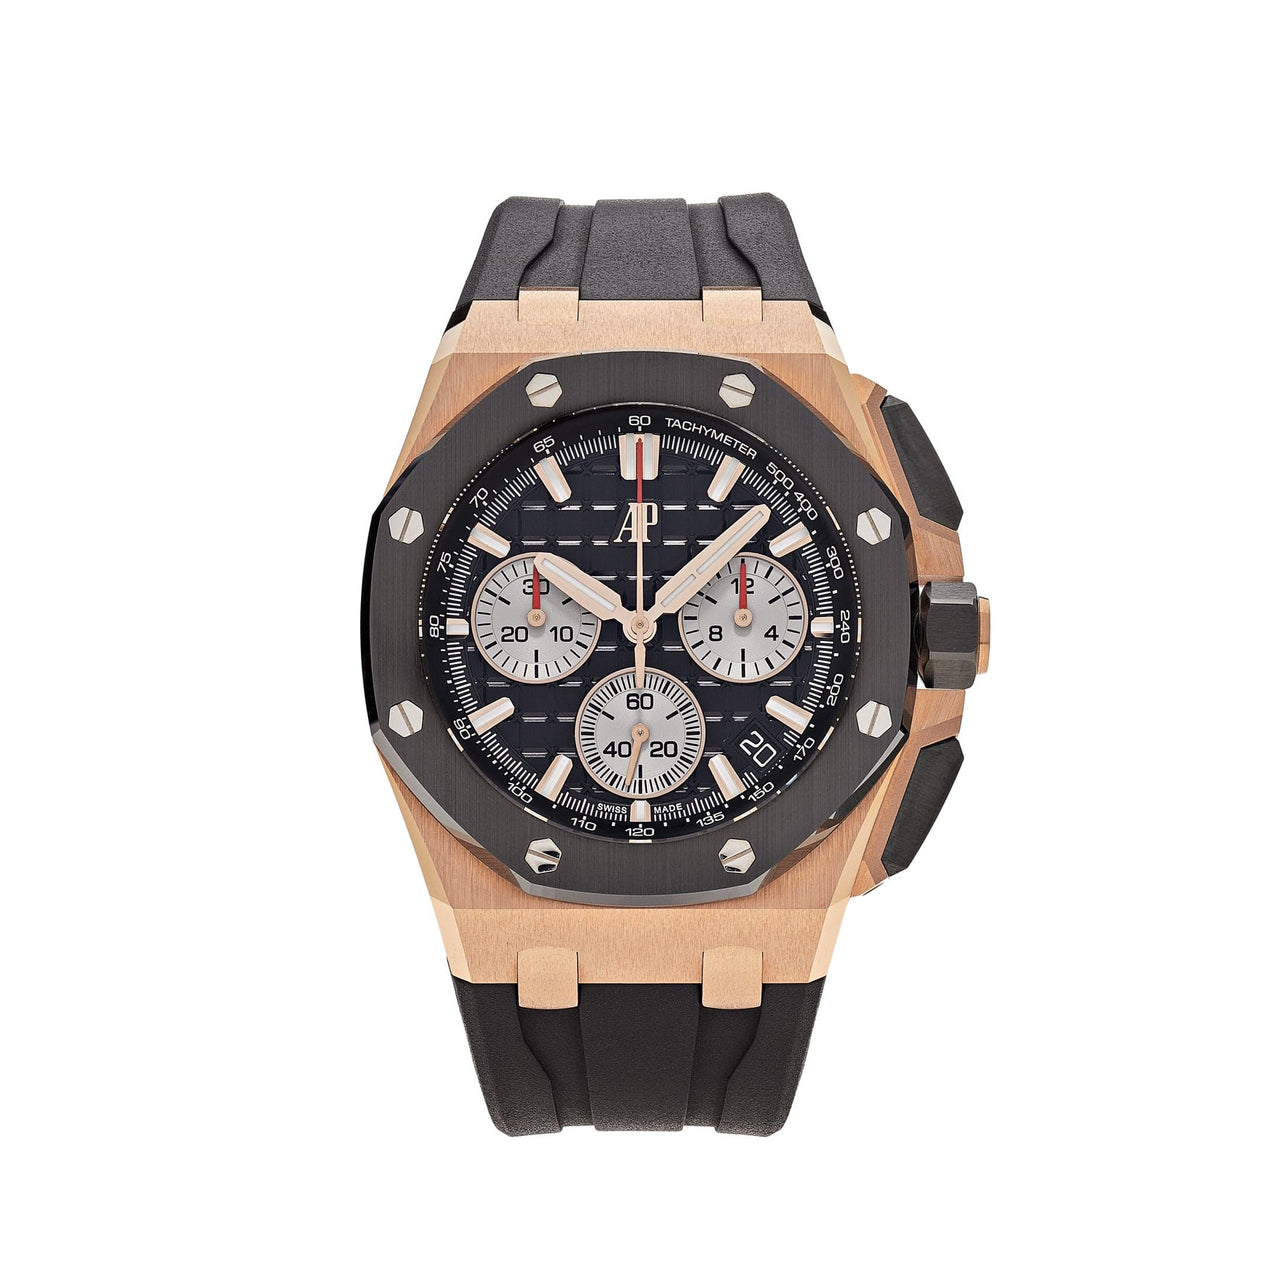 Luxury Watch Audemars Piguet Royal Oak OffShore Selfwinding Chronograph 26420RO.OO.A002CA.01 Wrist Aficionado